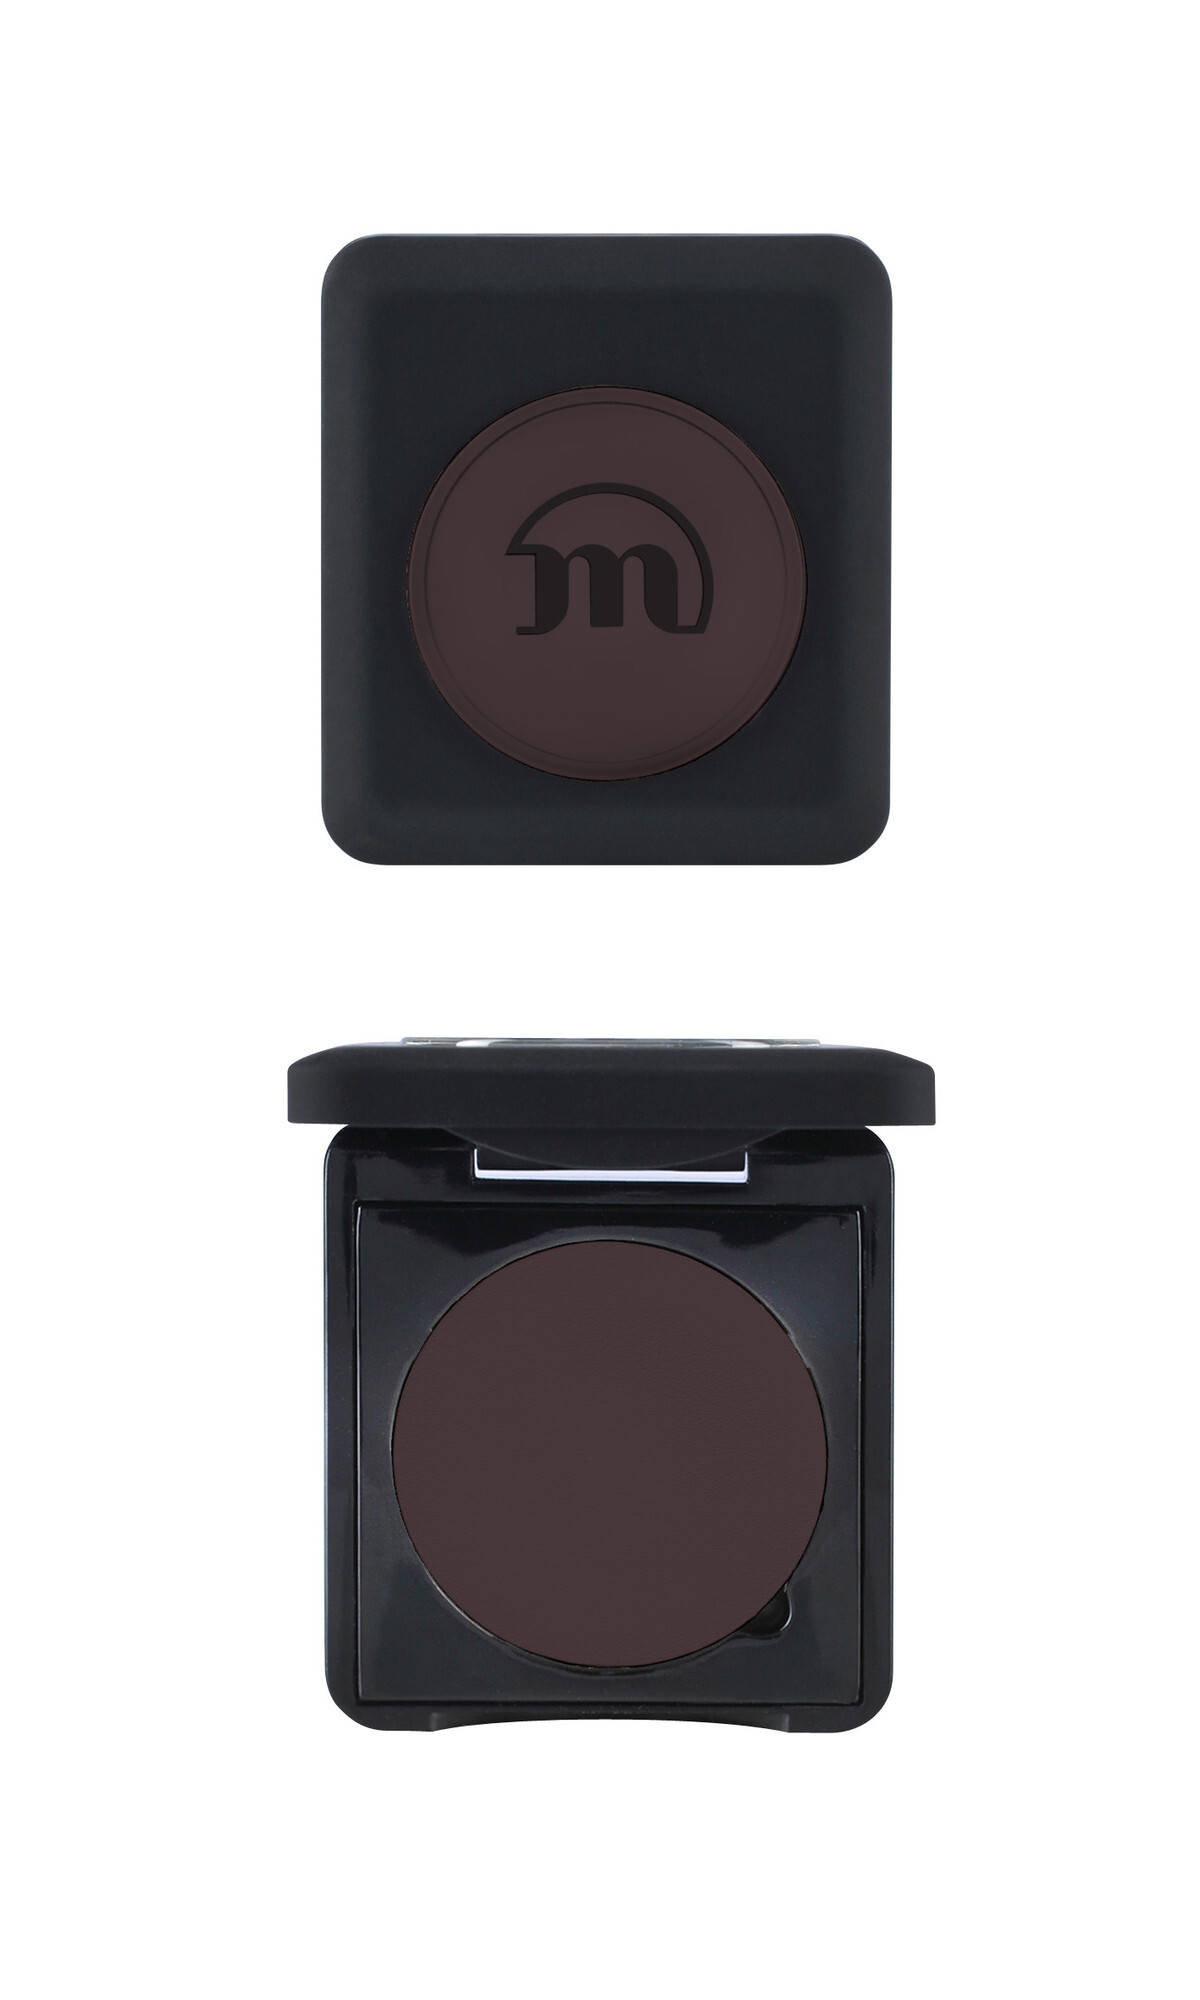 Make-up Studio Eyeshadow in Box Type B 438 B 438